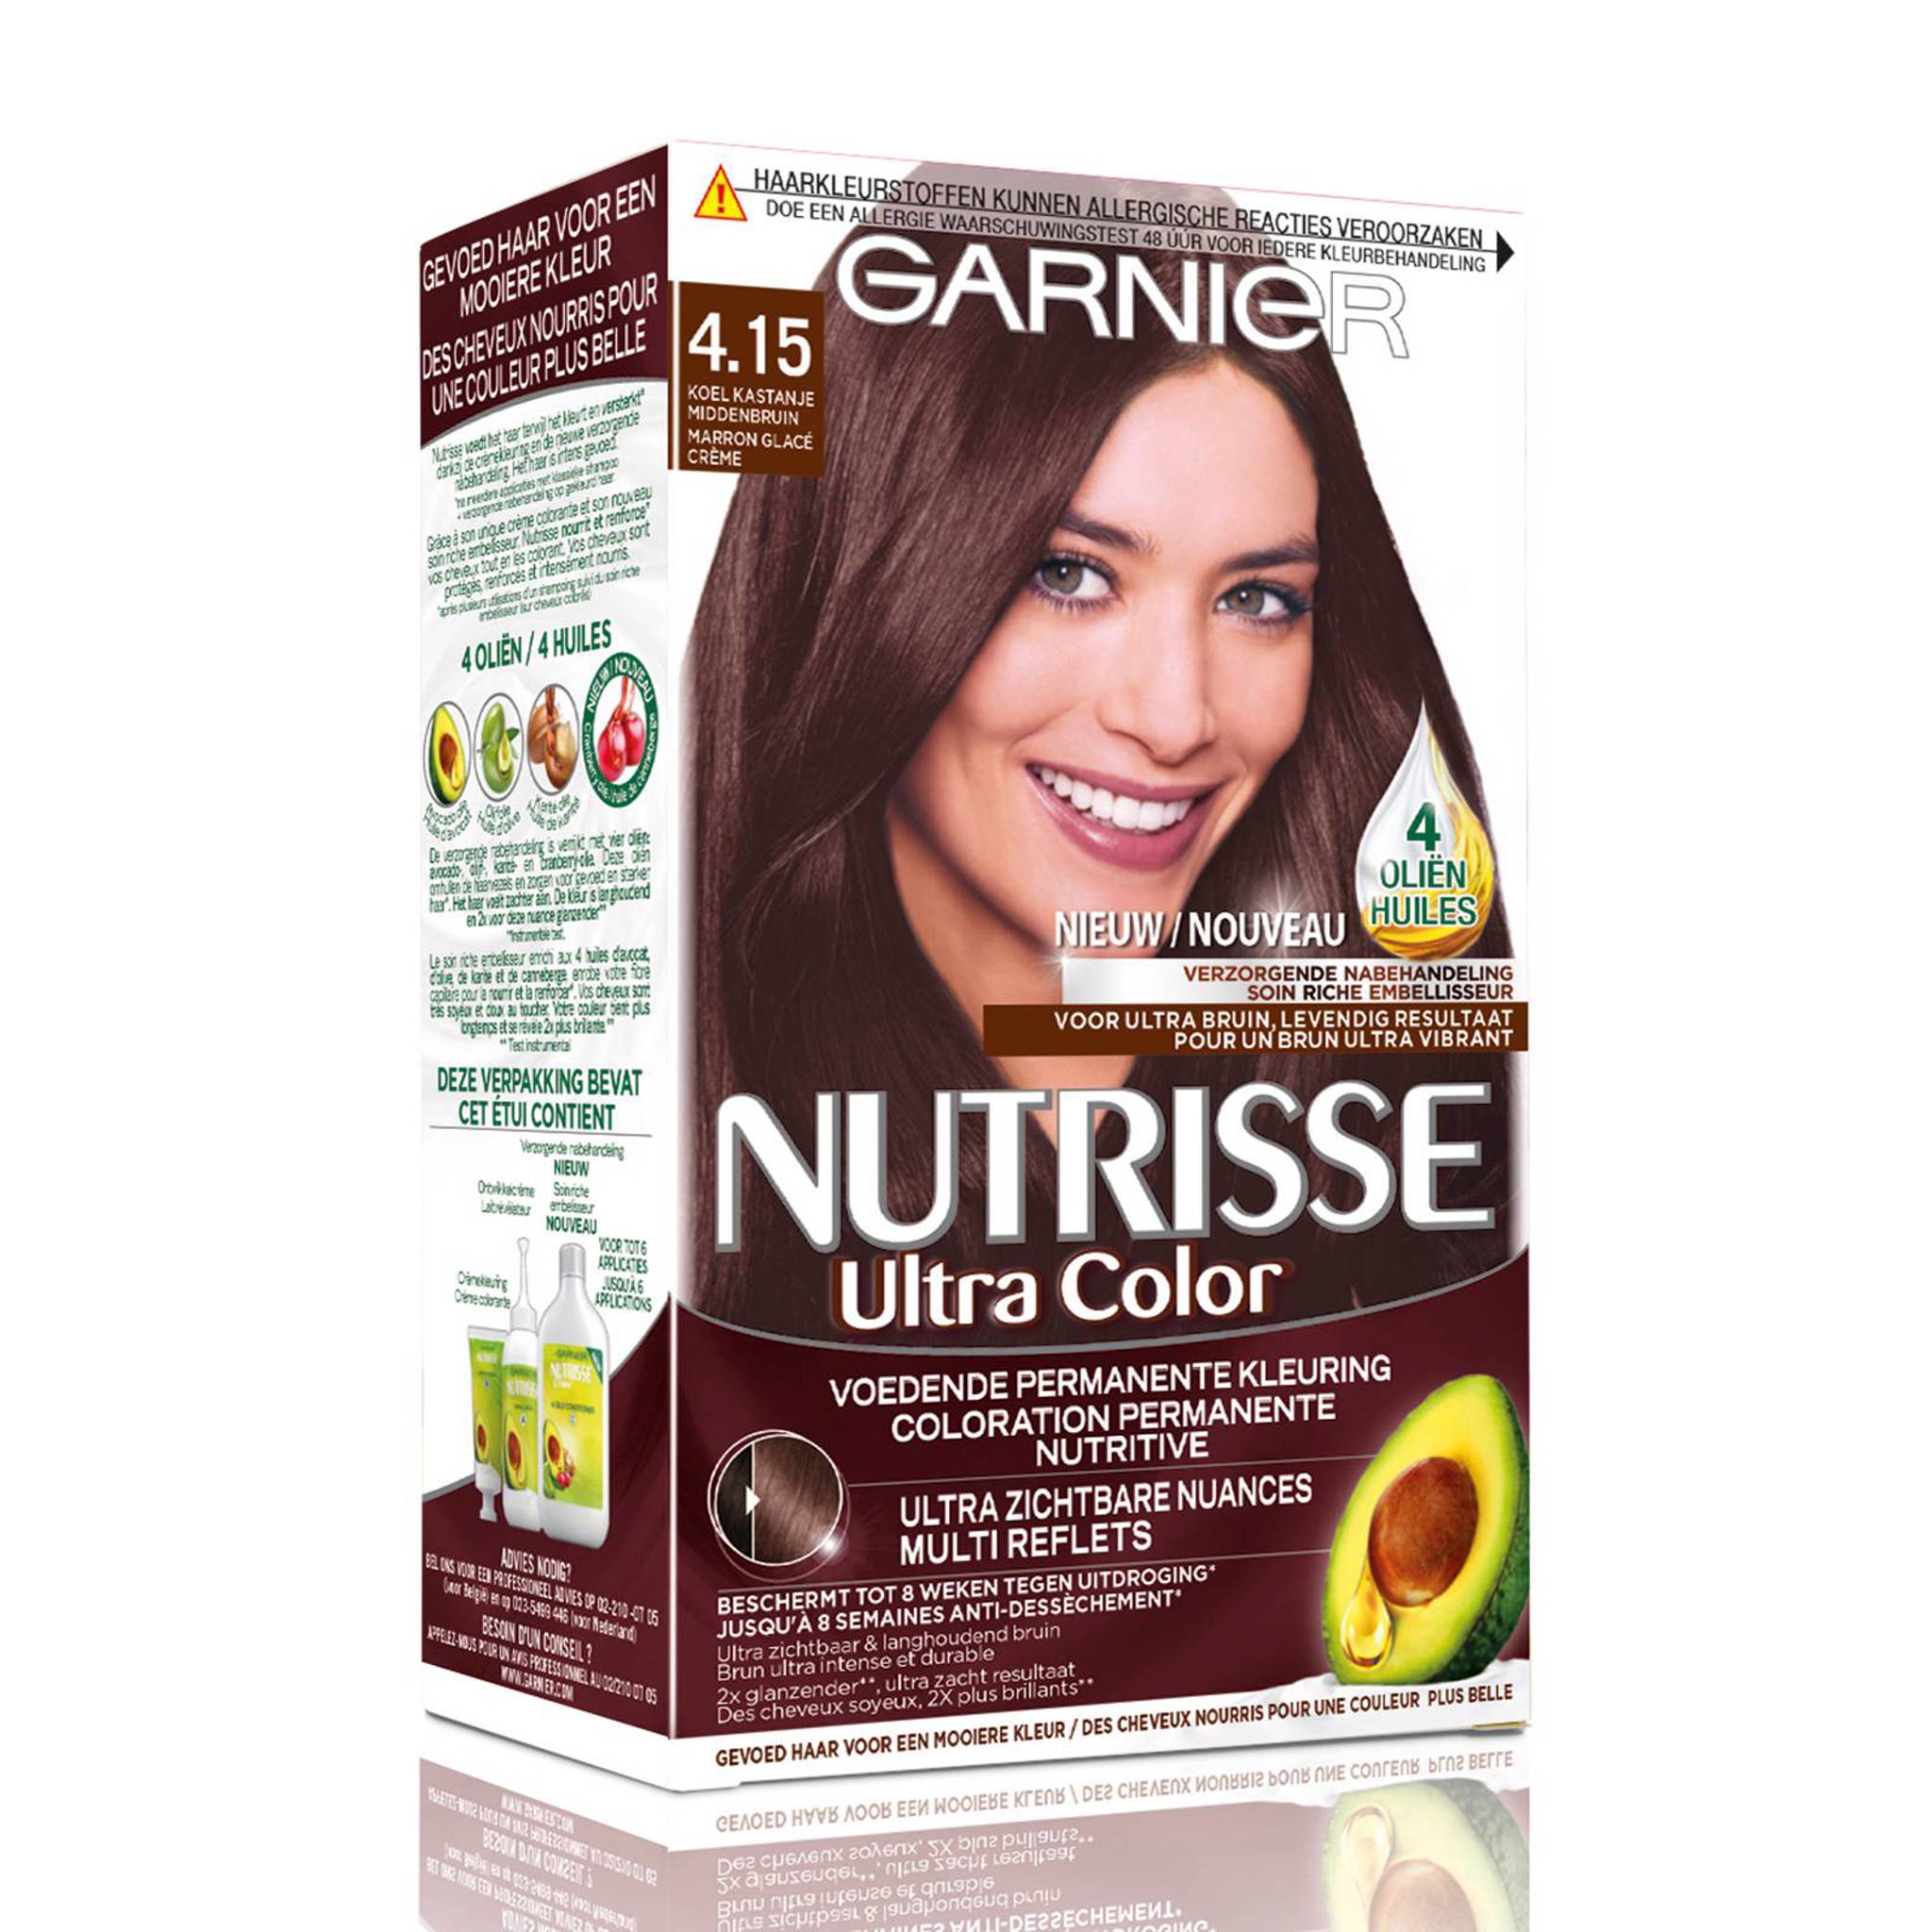 Garnier Nutrisse Crème haarkleuring 4.15 Koel Kastanje Middenbruin | wehkamp